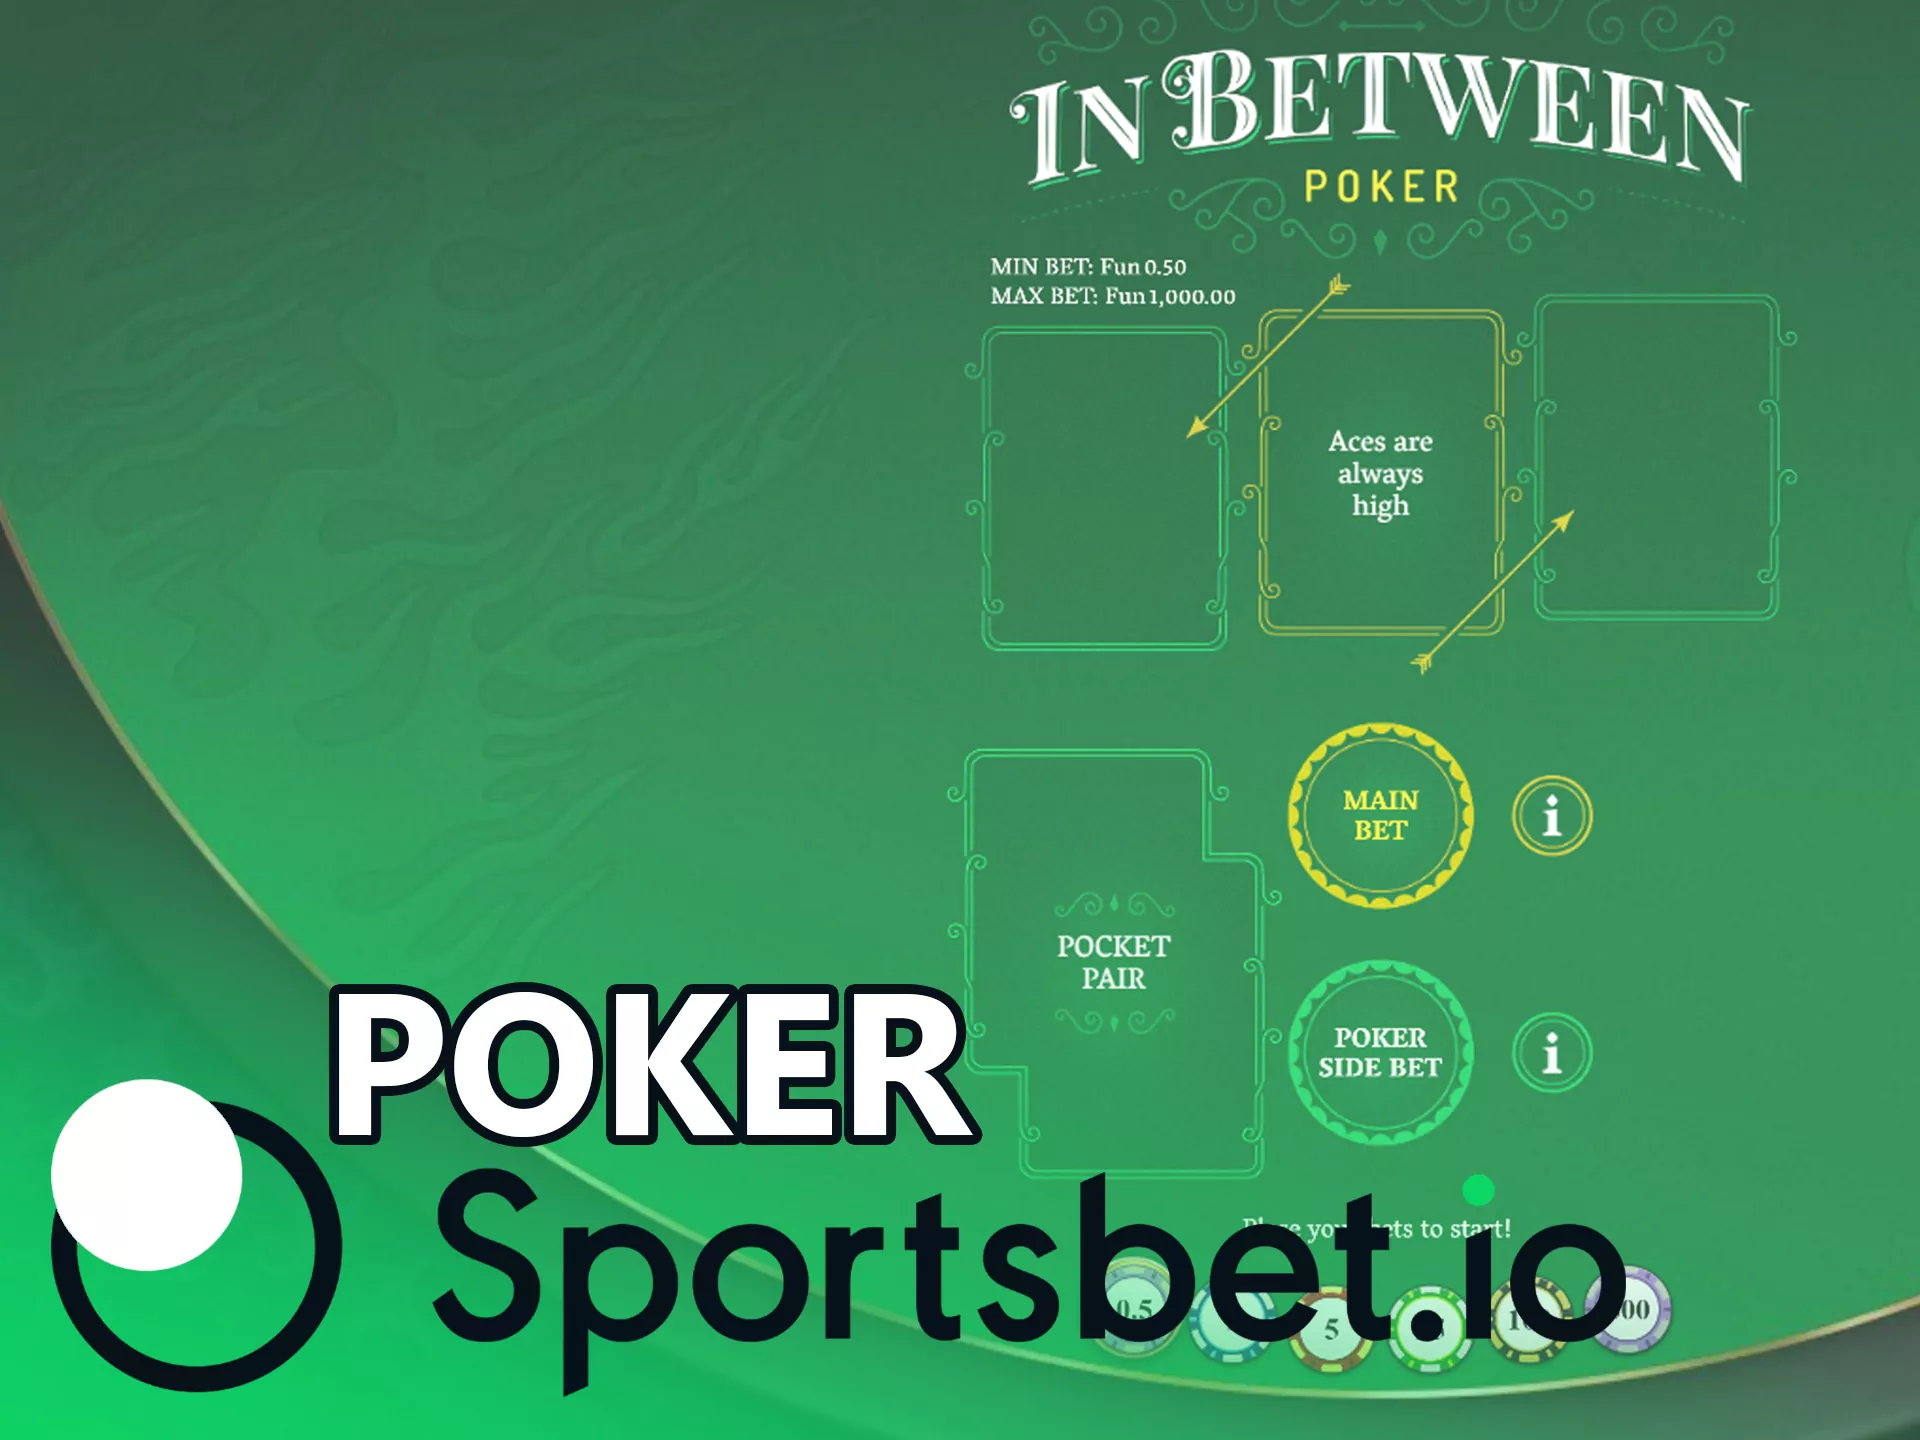 Play poker games at Sportsbet.